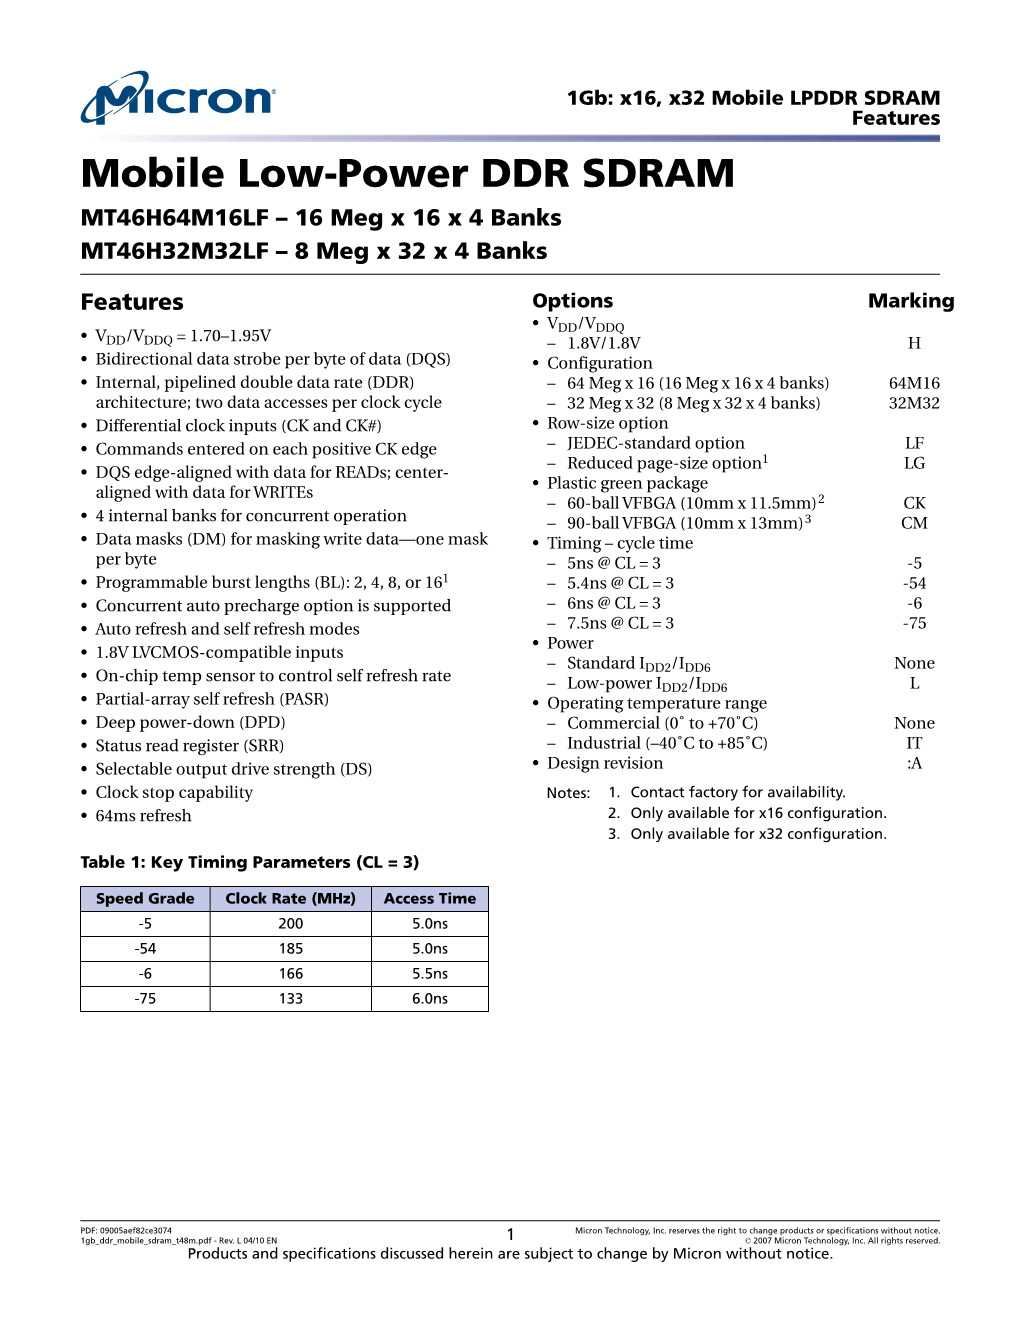 1Gb: X16, X32 Mobile LPDDR SDRAM Features Mobile Low-Power DDR SDRAM MT46H64M16LF – 16 Meg X 16 X 4 Banks MT46H32M32LF – 8 Meg X 32 X 4 Banks